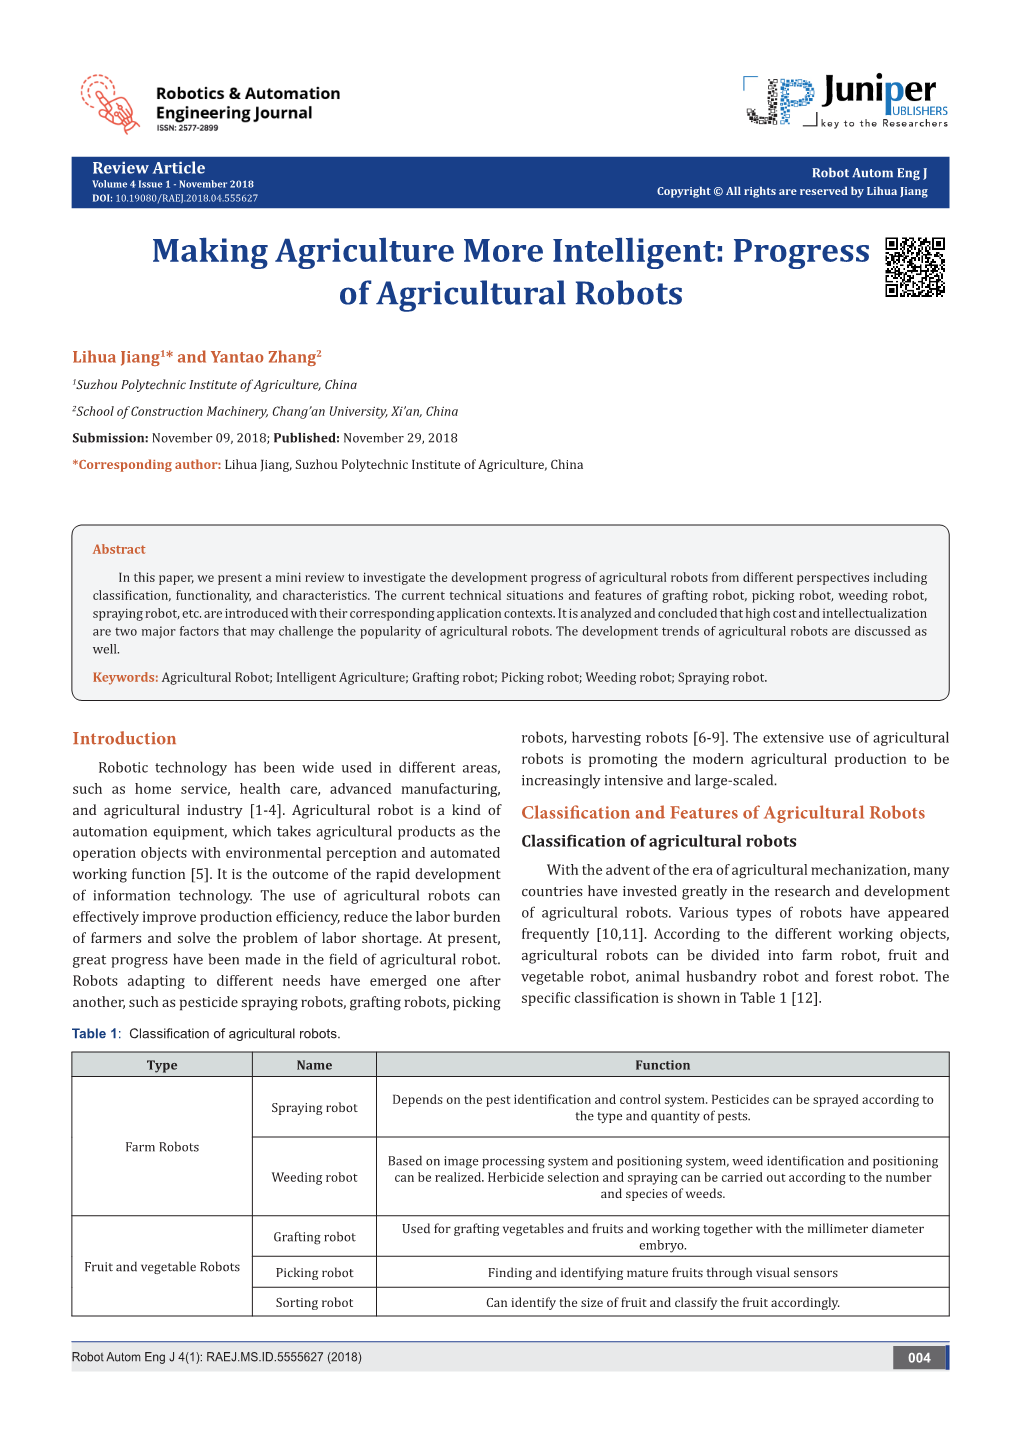 Making Agriculture More Intelligent: Progress of Agricultural Robots